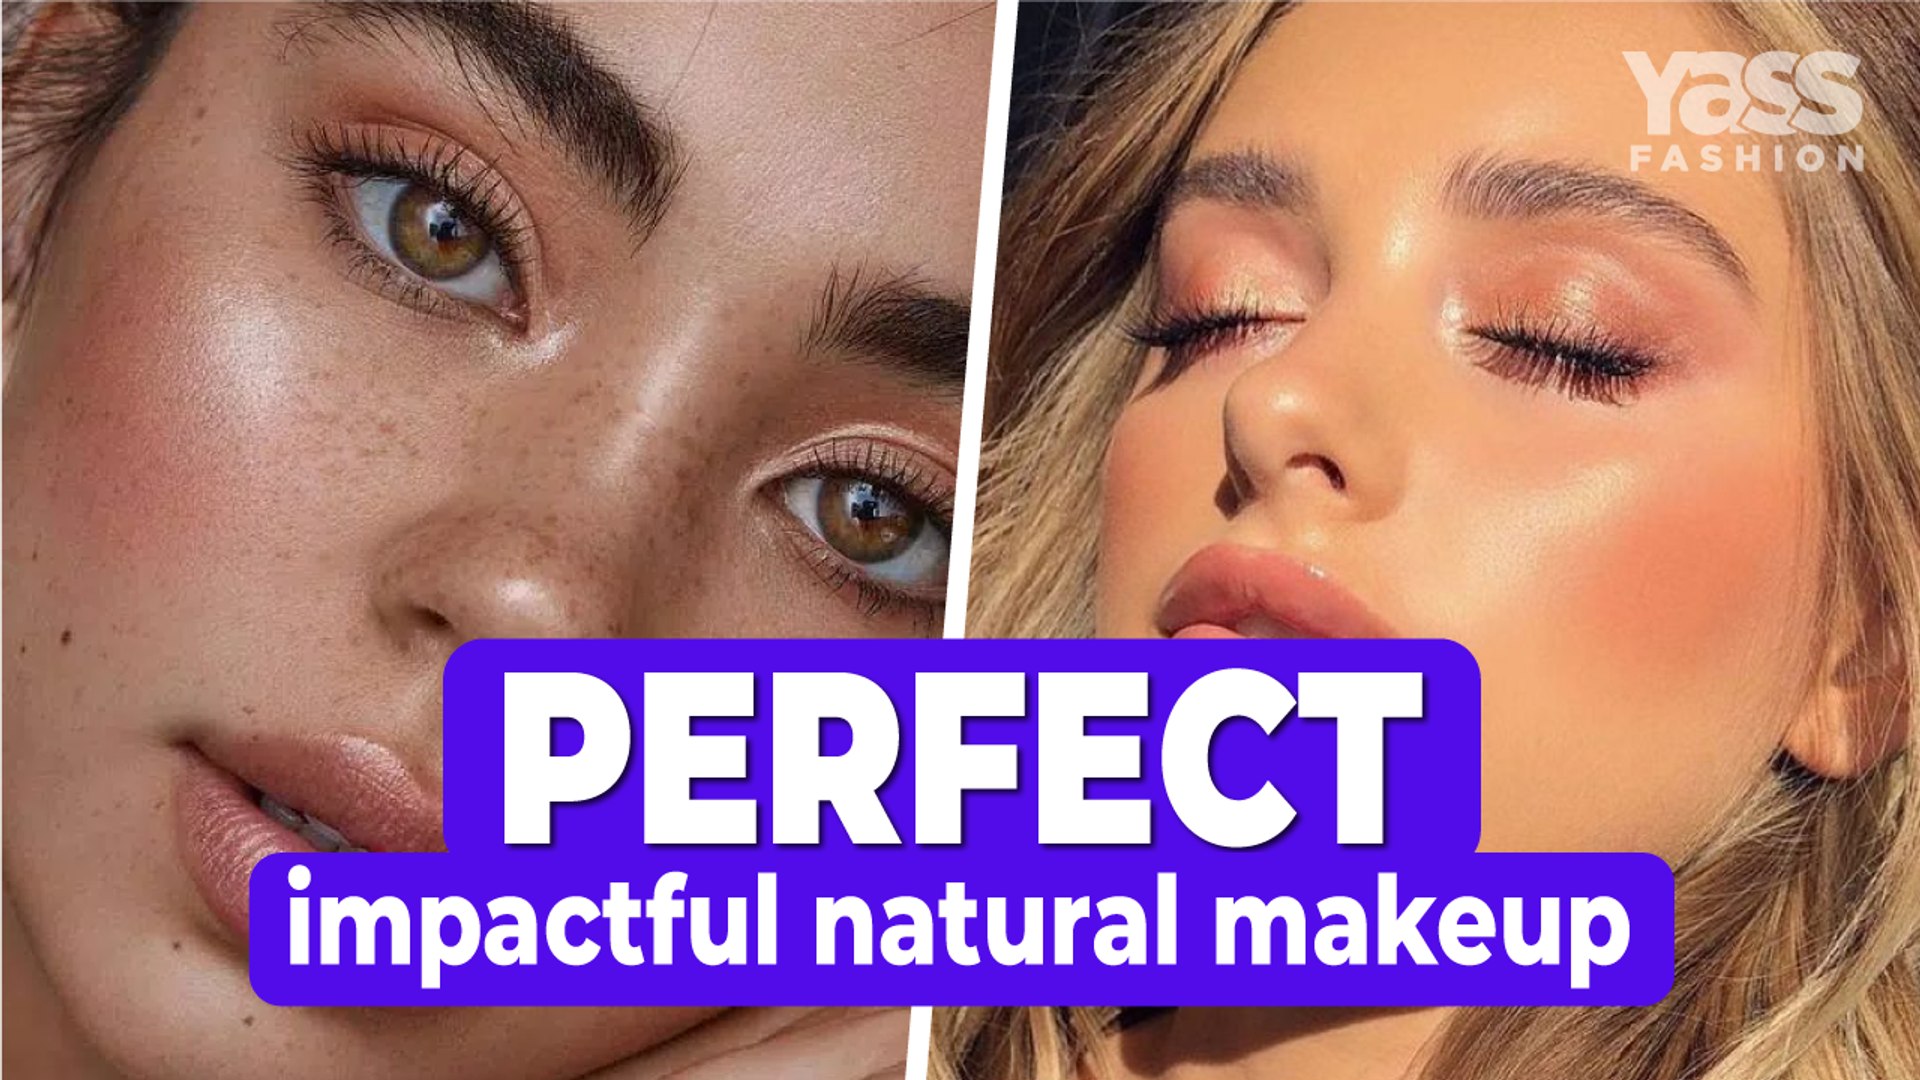 Perfect and impactful natural makeup